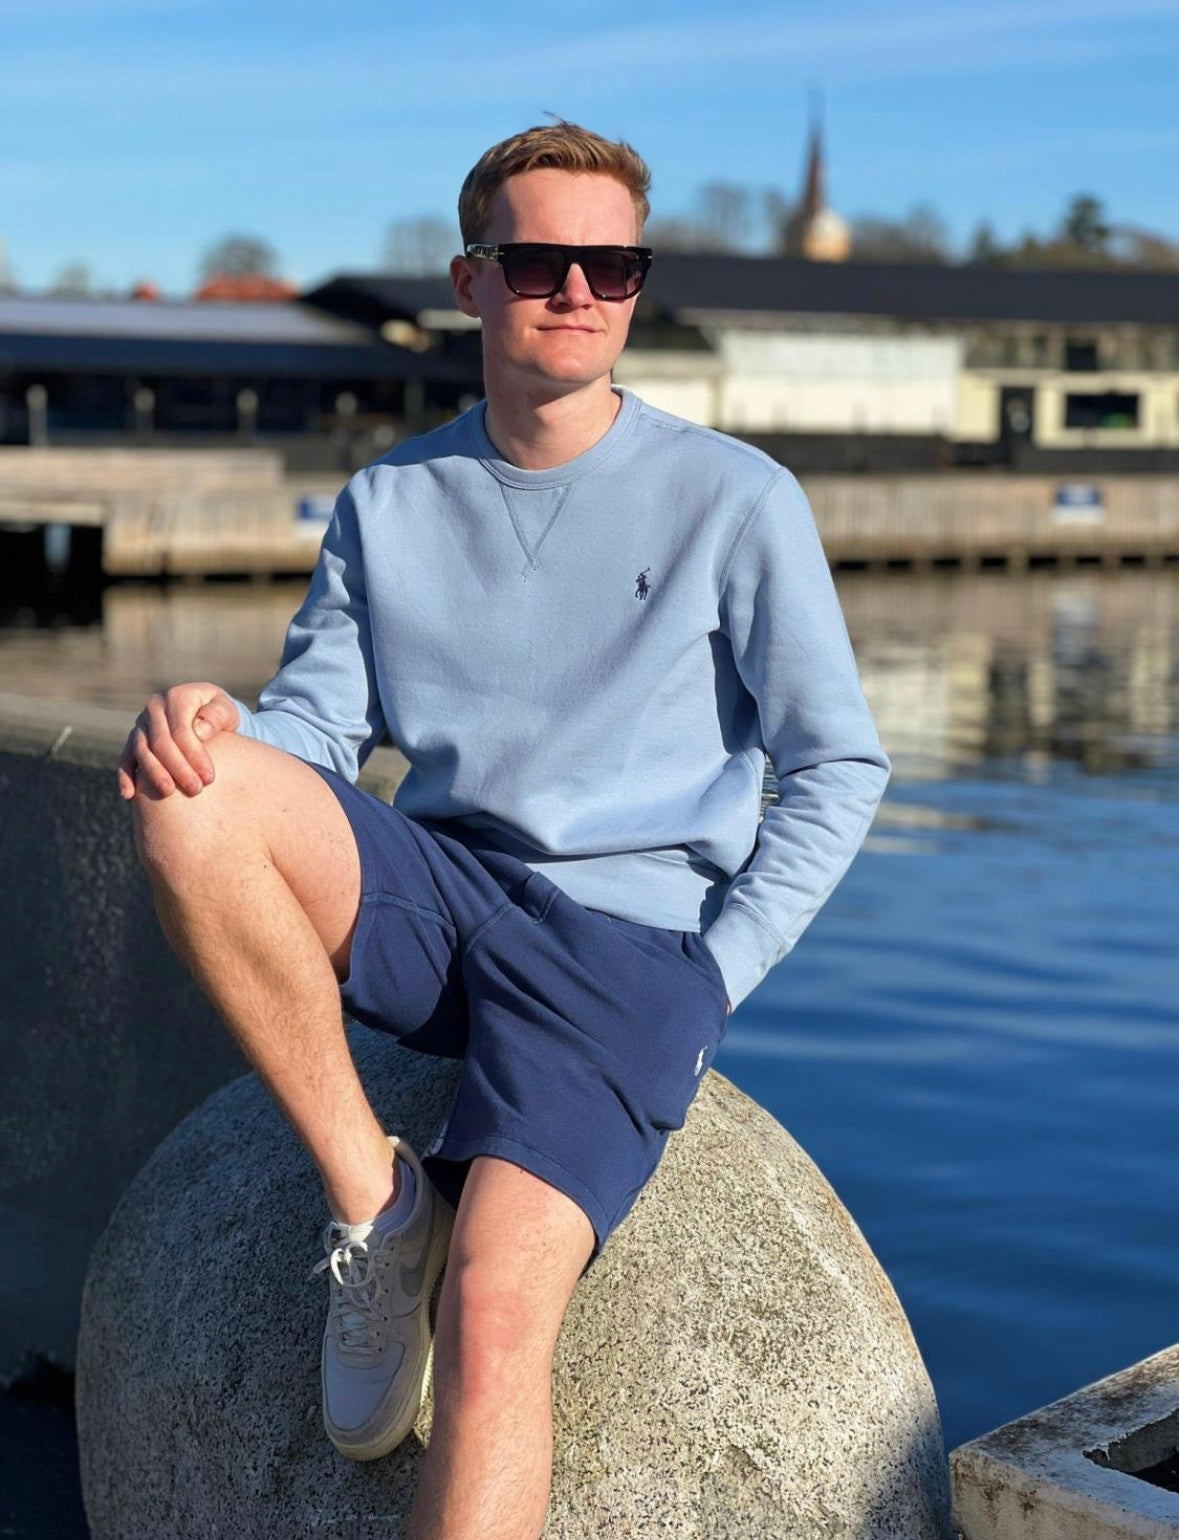 Polo Ralph Lauren College shorts - Newport Navy